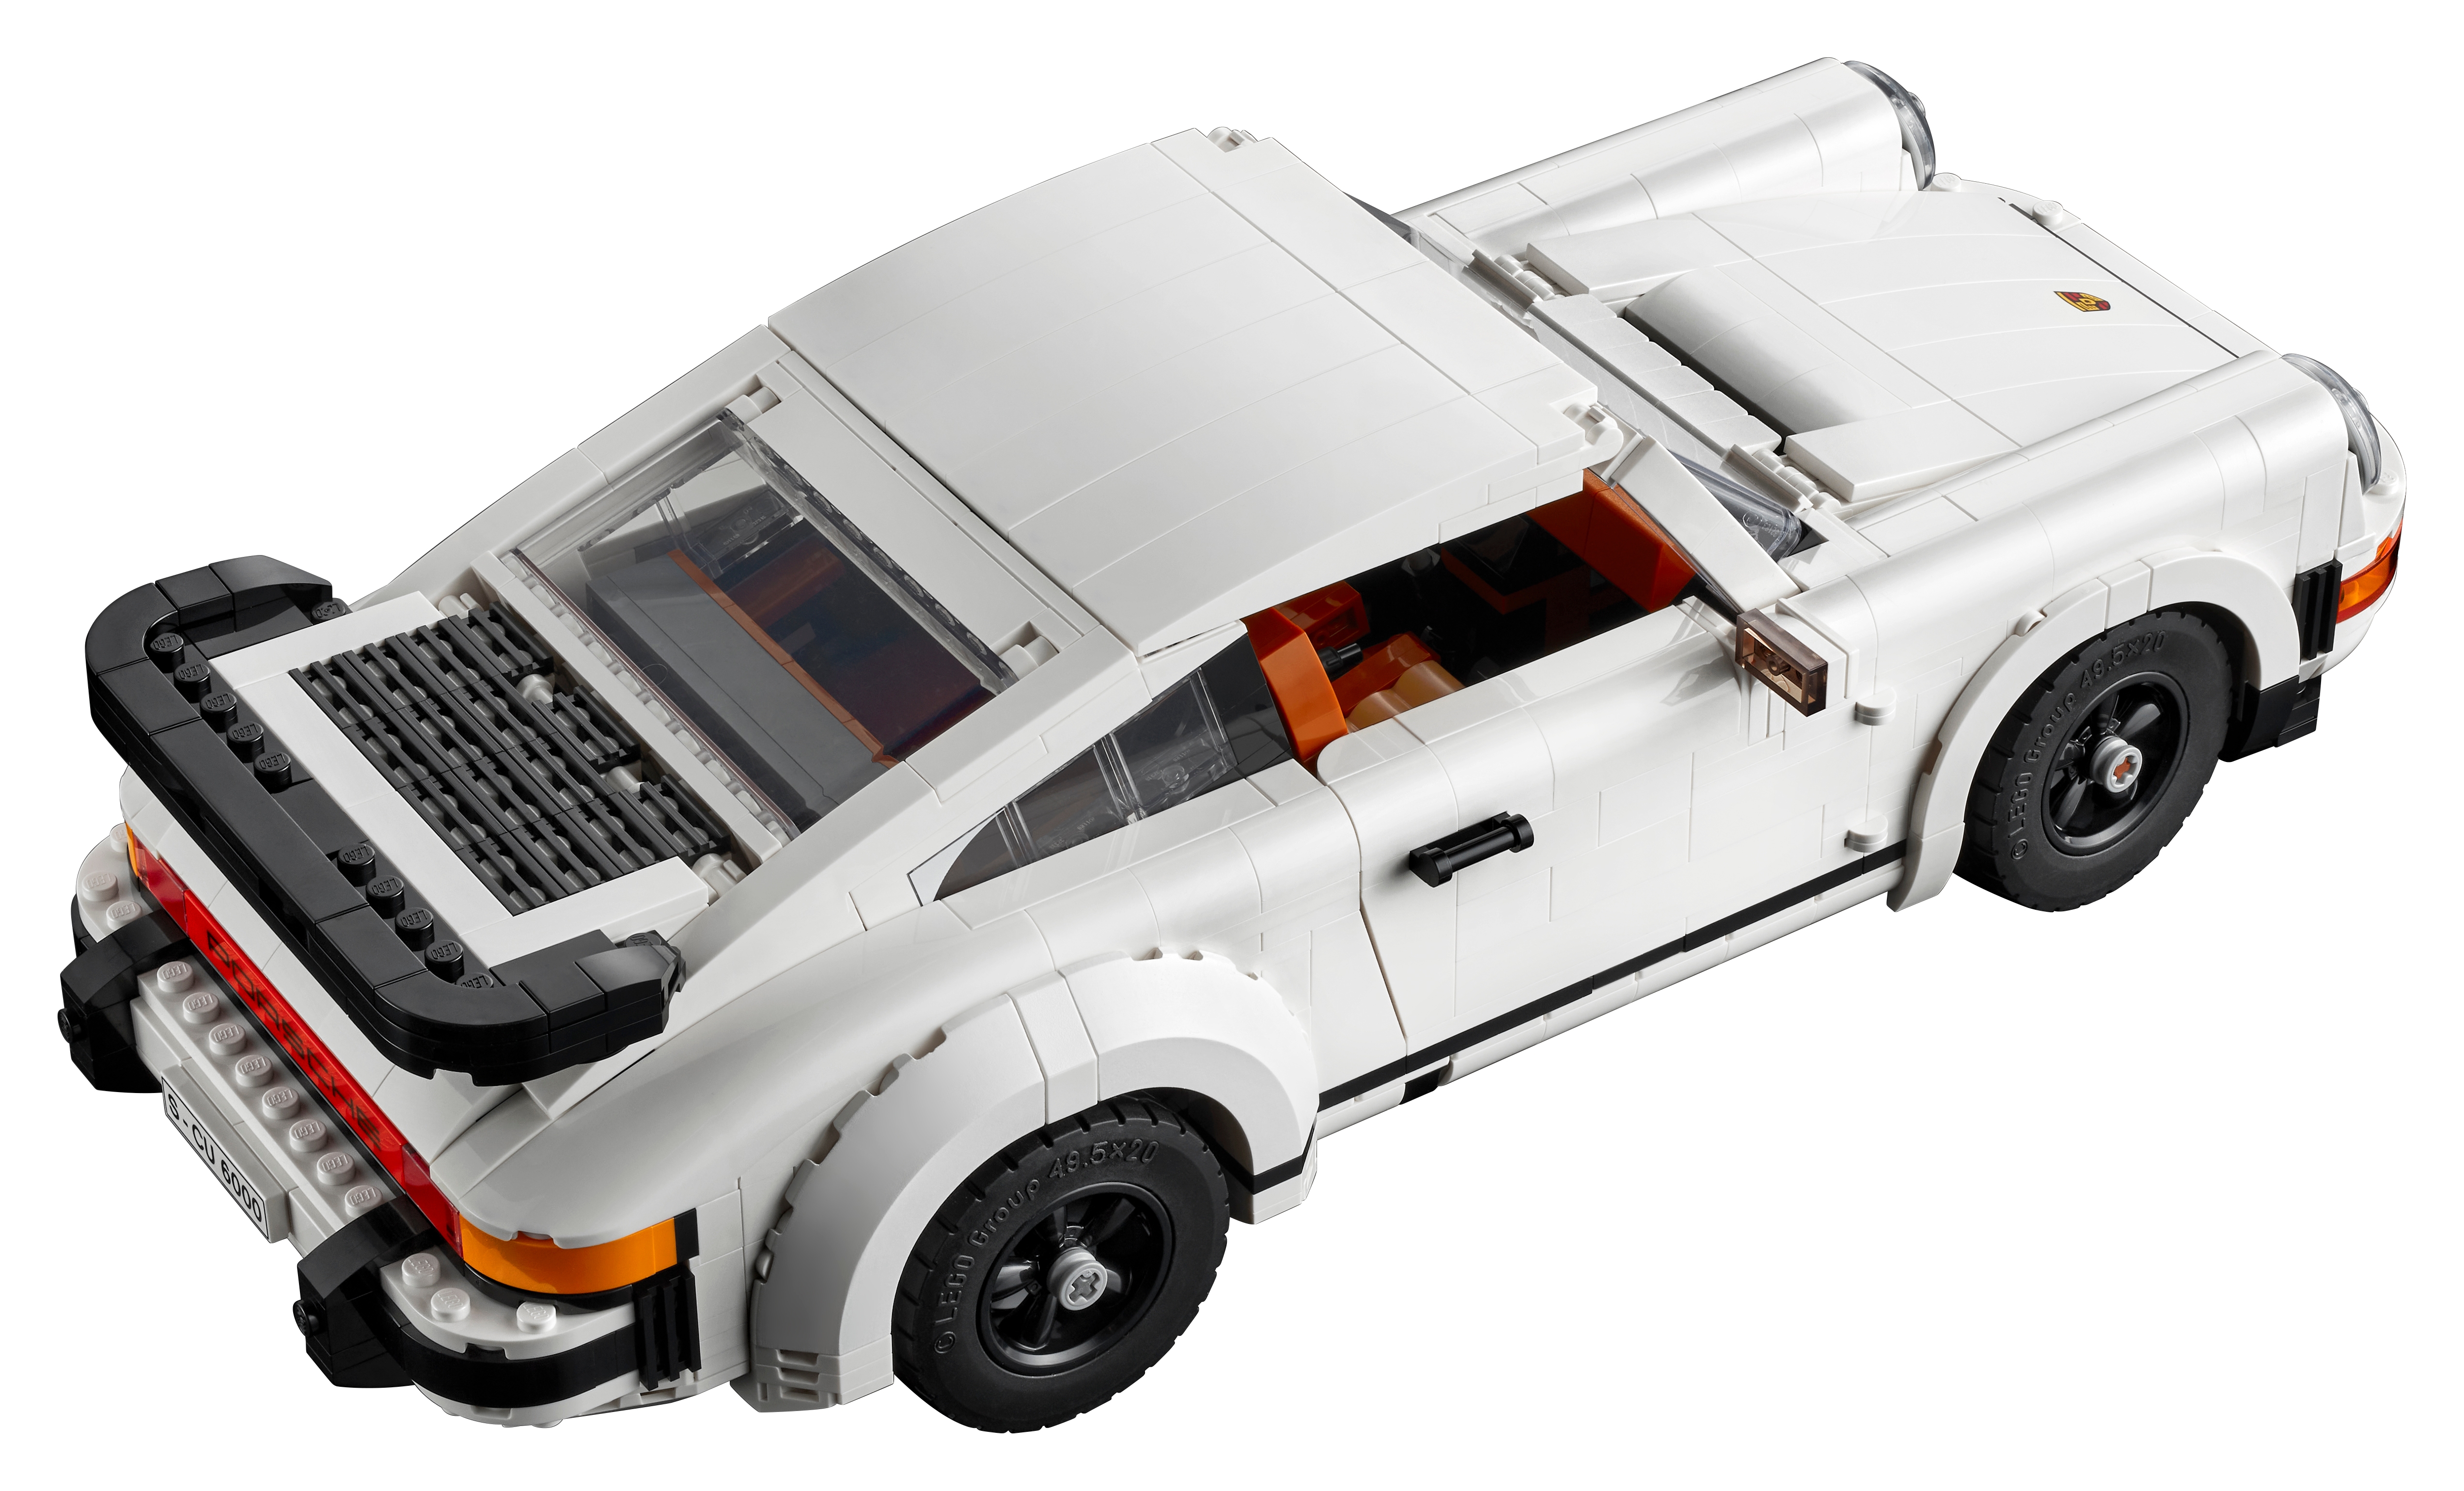 Review: LEGO Creator Expert Porsche 911 Set 10295